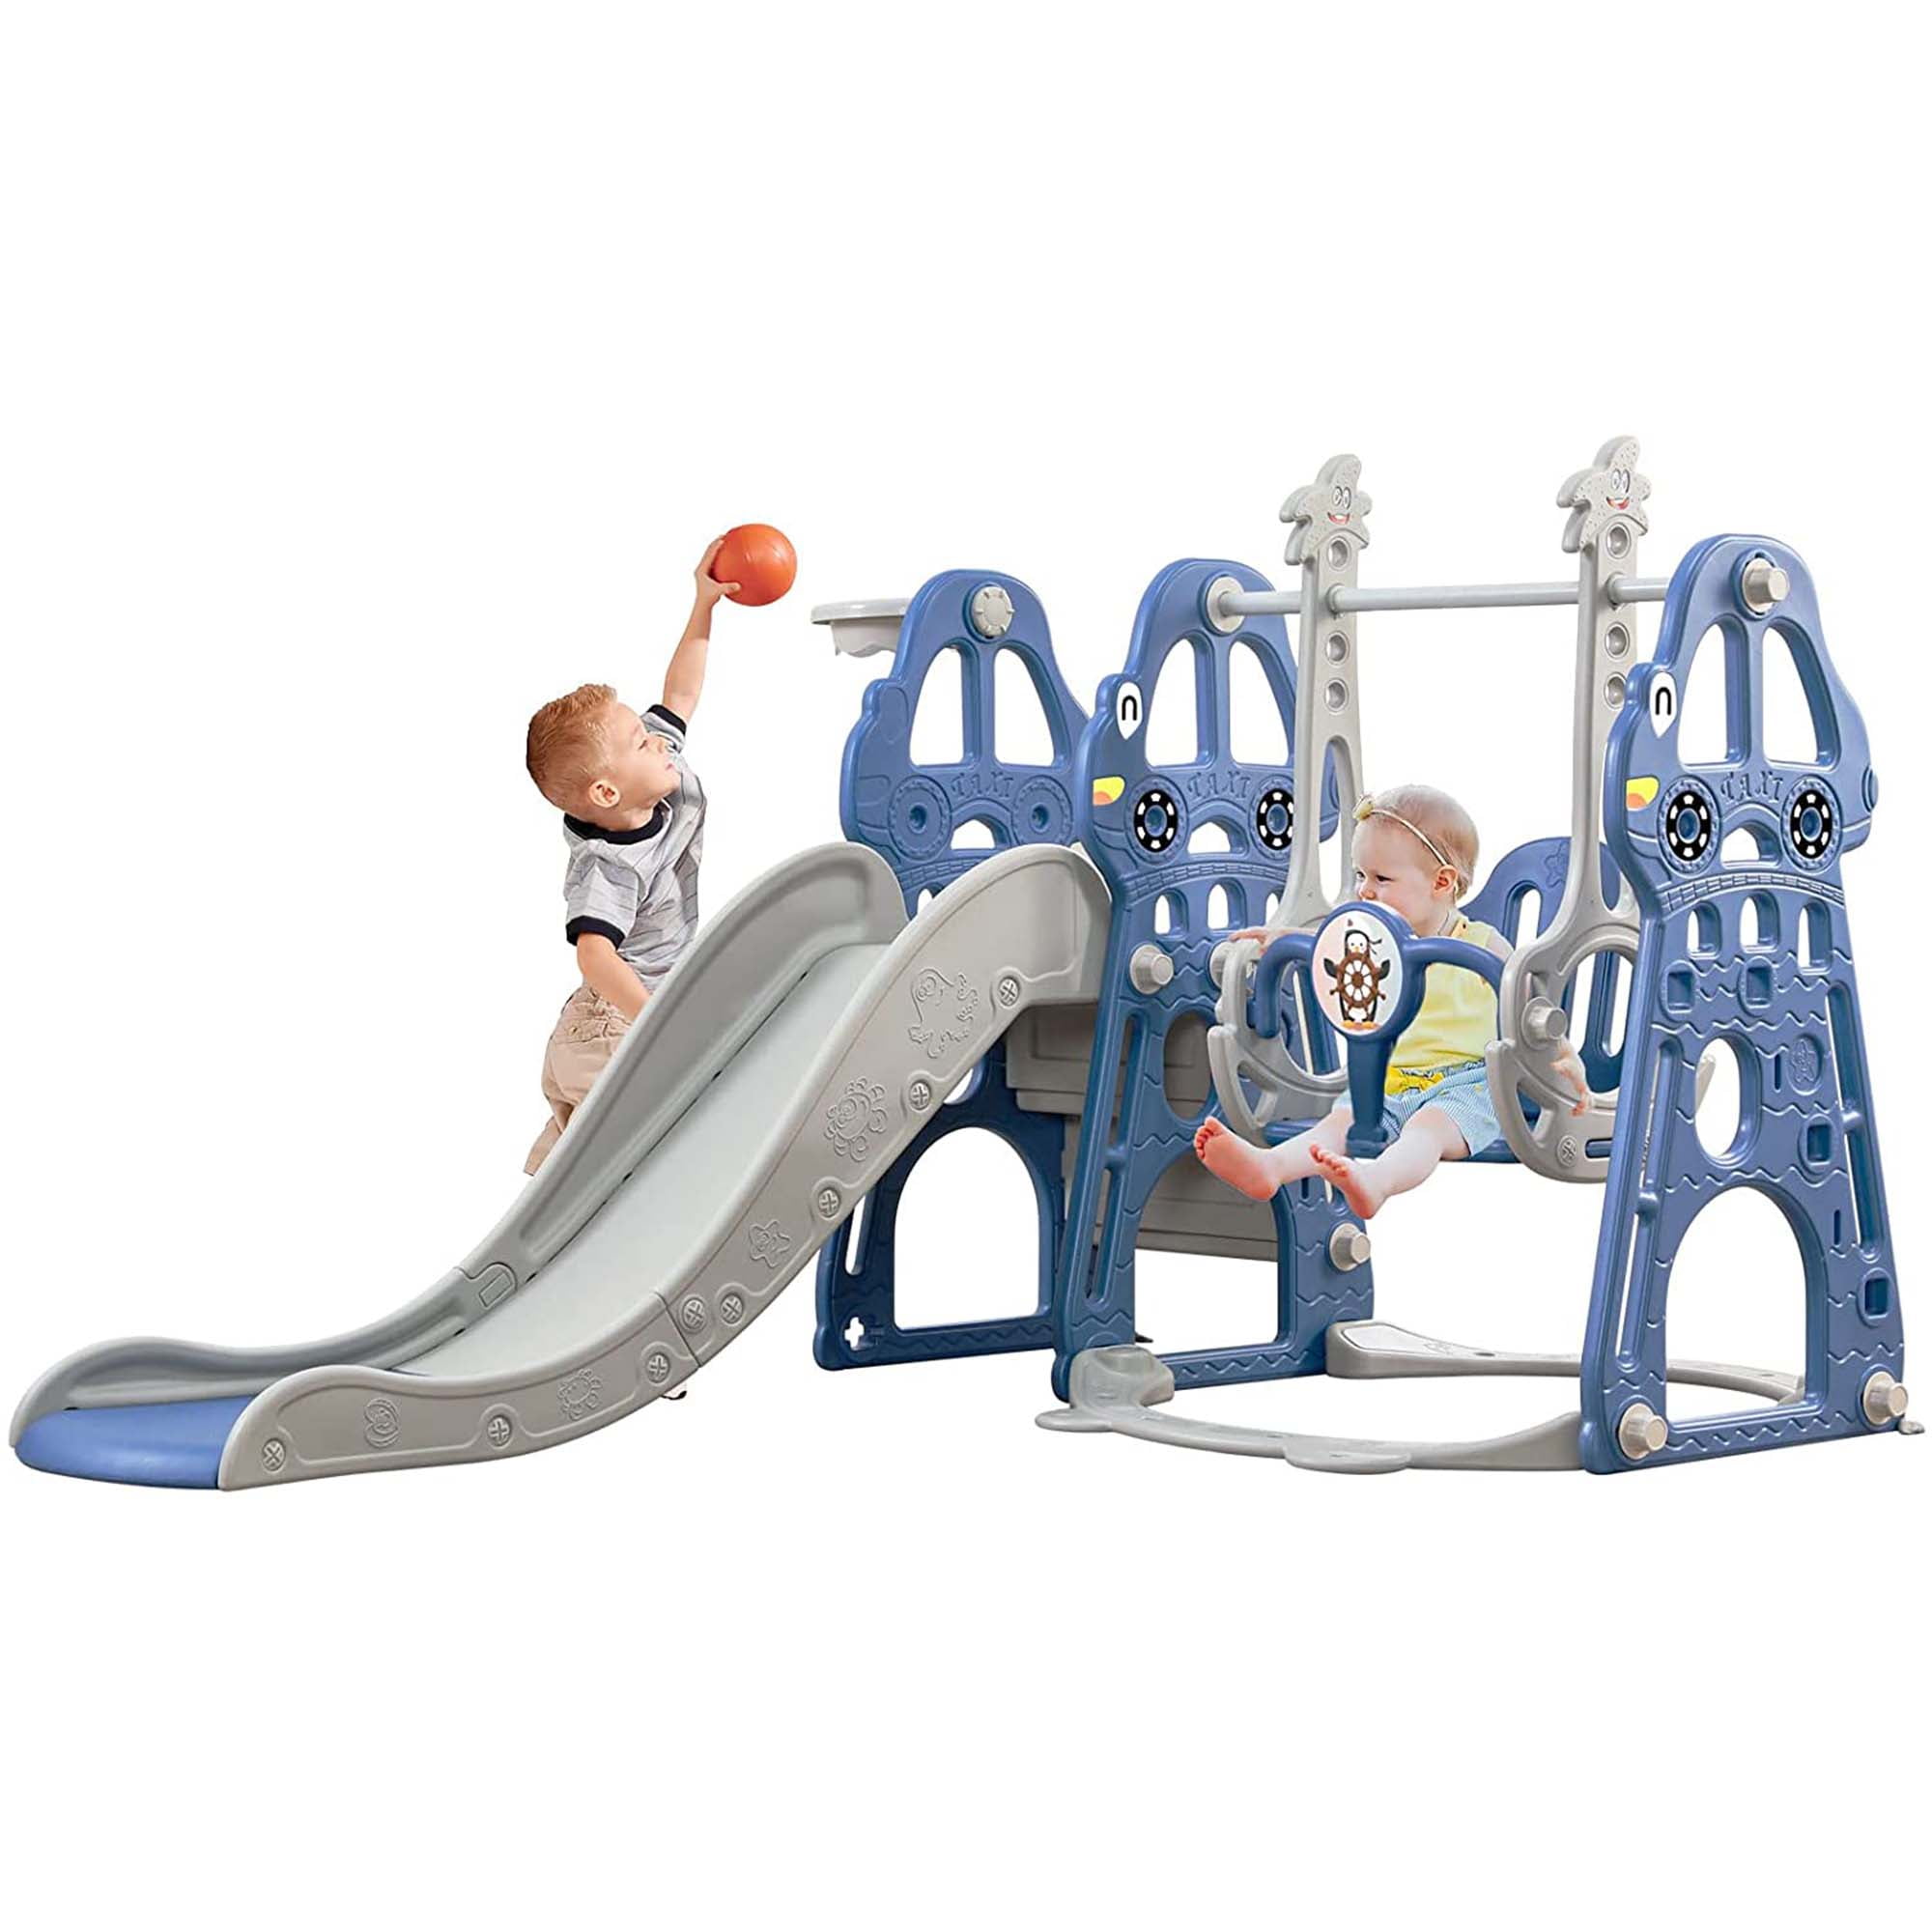 4 in 1 Toddlers Slide Slide and Swing Set for Toddlers Indoor/Outdoor Backyard Kids Play Climber Slide Playset with Basketball Extra Long Slide Blue Safe Climbing Toddler Slide 